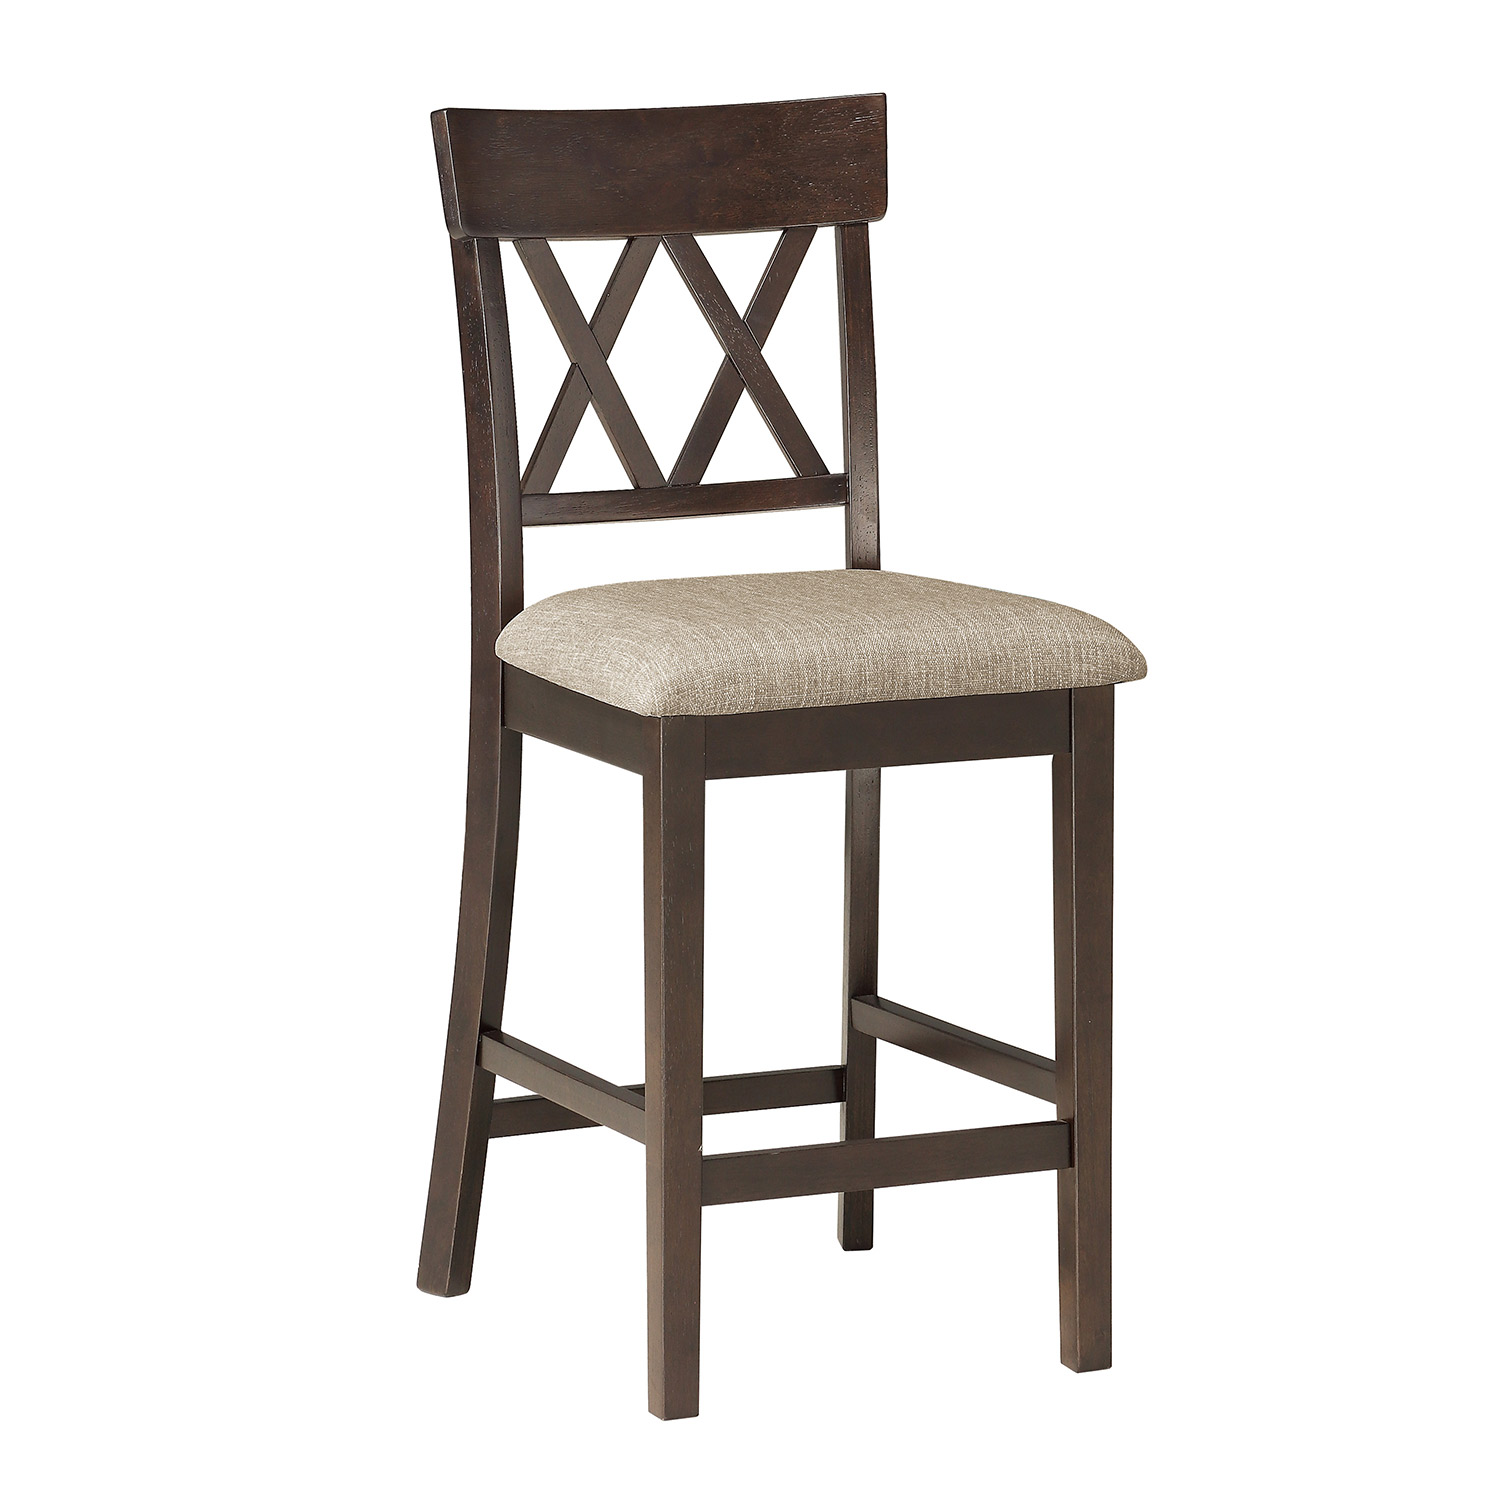 Homelegance Balin Counter Height Chair - Dark Brown